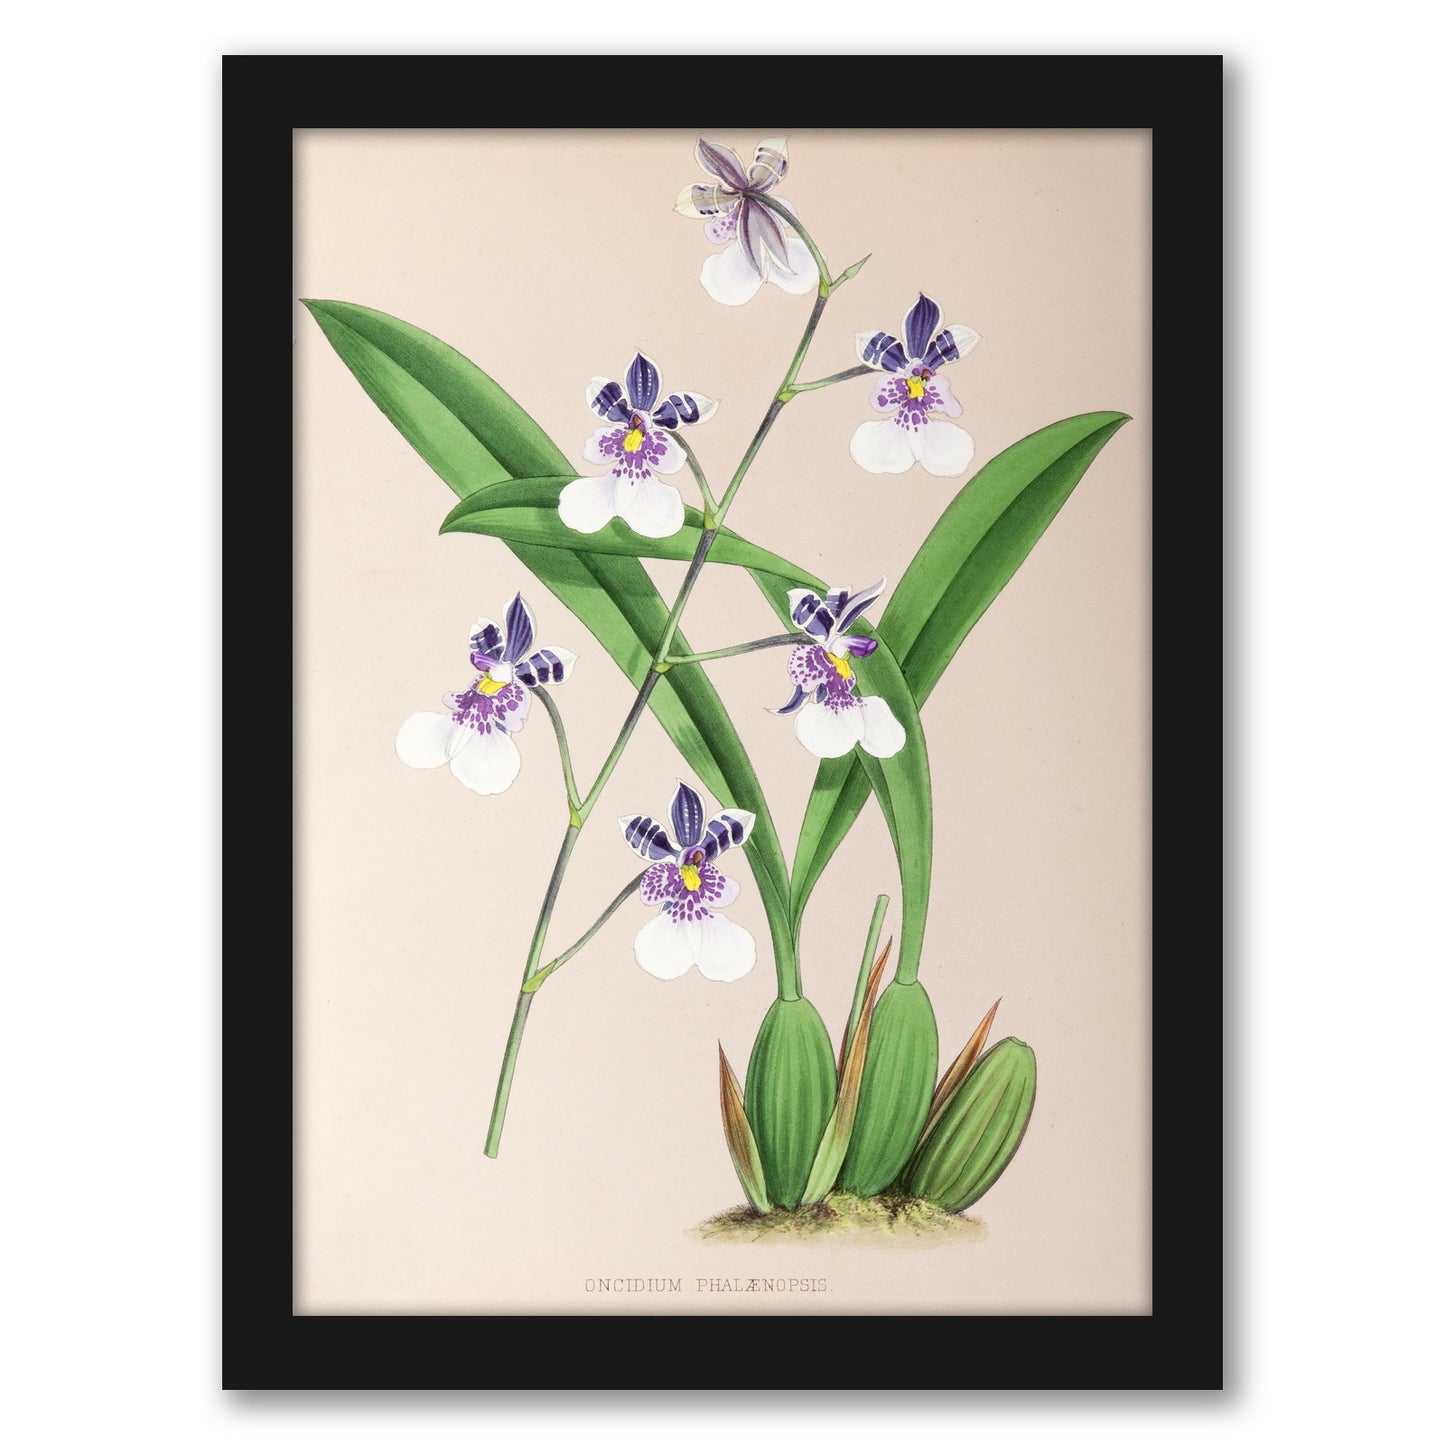 Fitch Orchid Oncidium Phalaenopsis by New York Botanical Garden - Framed Print